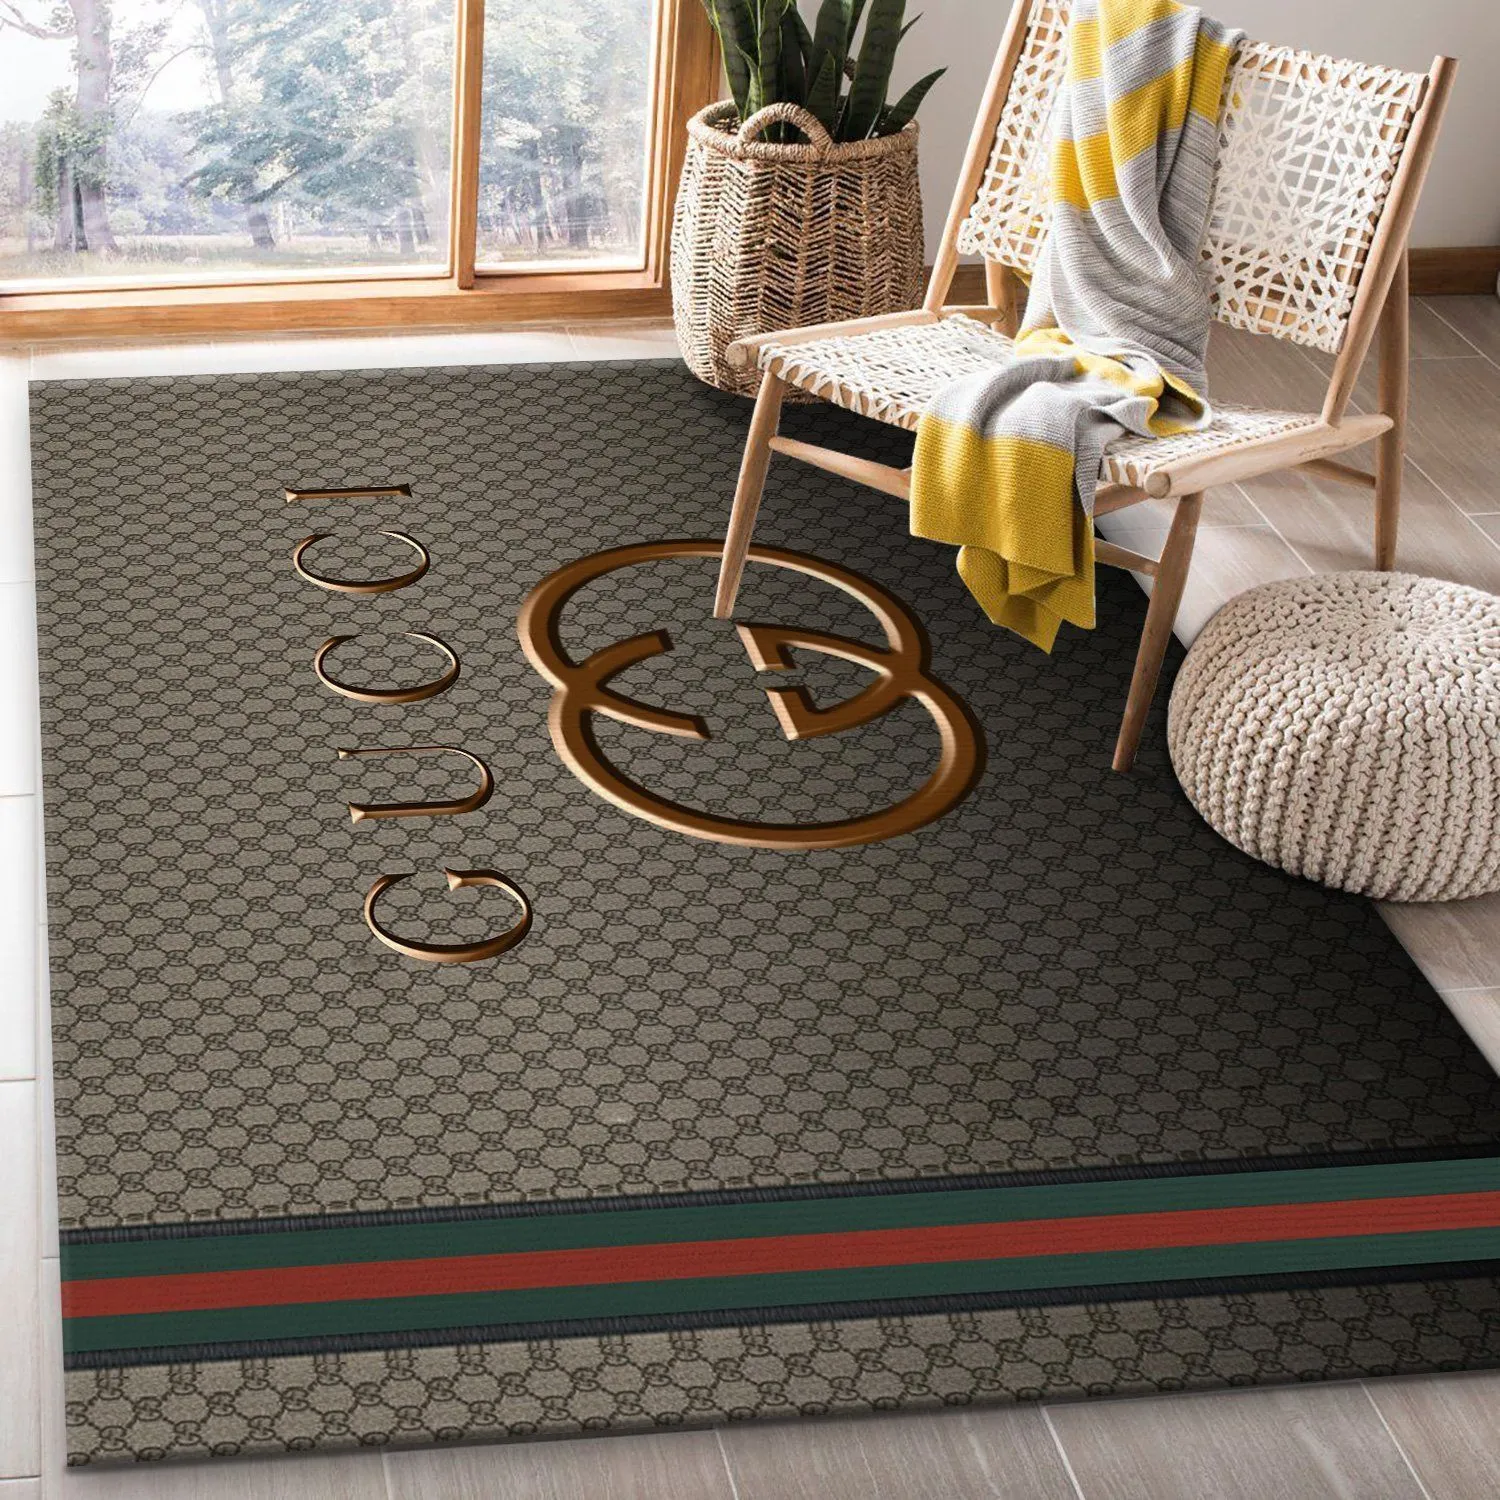 Gucci Monogram Rectangle Rug Door Mat Fashion Brand Area Carpet Home Decor Luxury